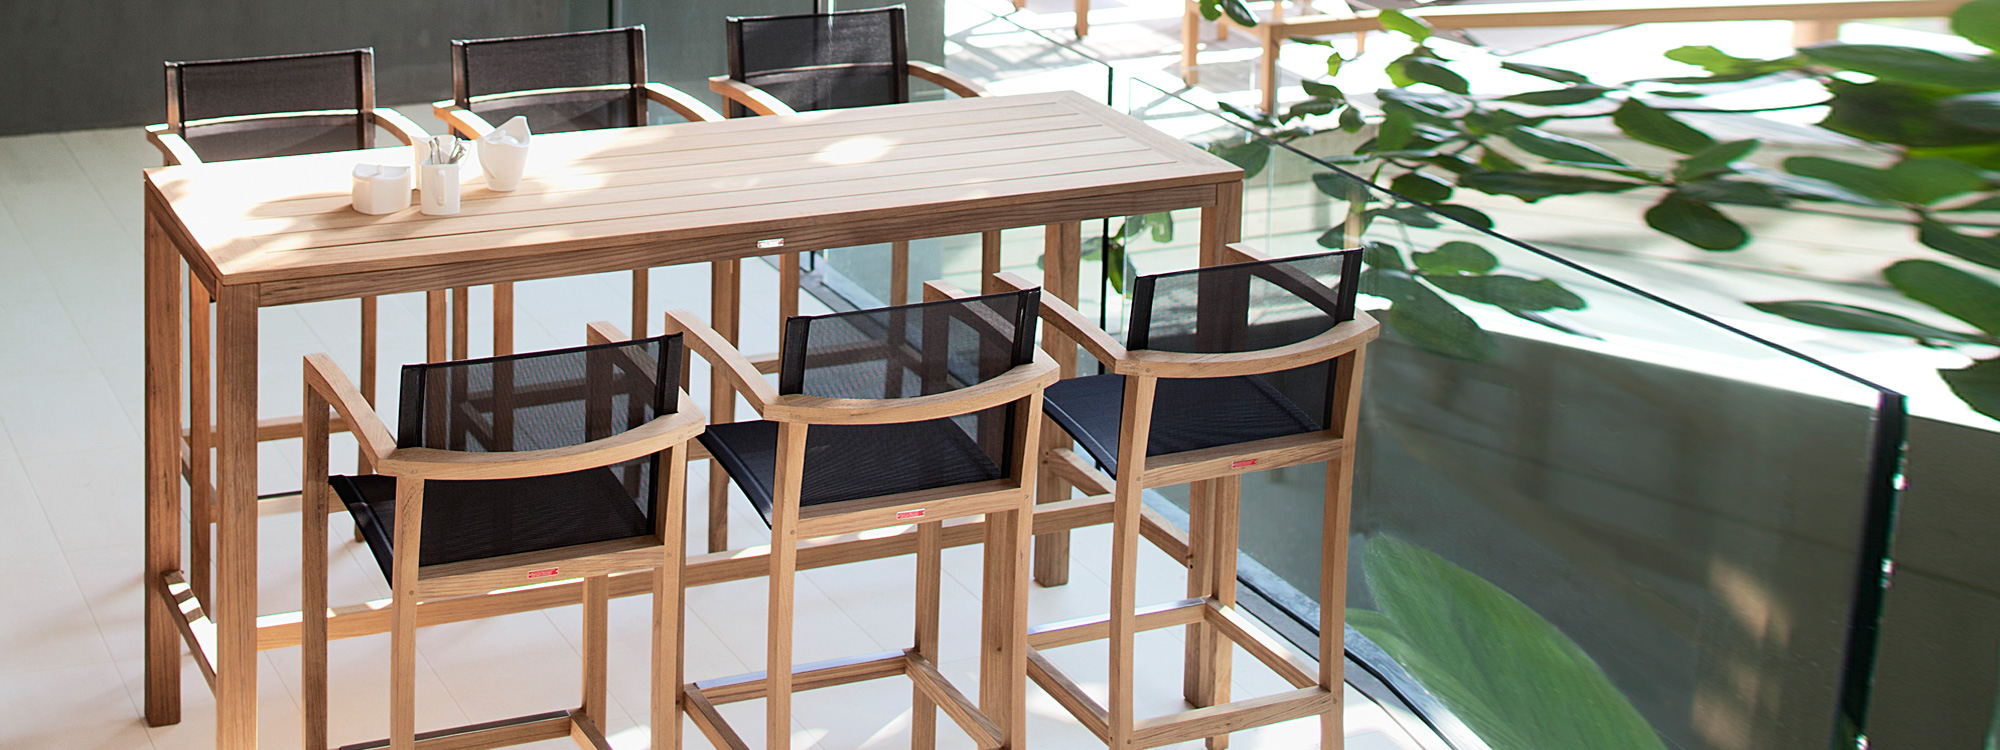 Image of XQI teak bar table and teak bar stools with black Batyline seats and backs by Royal Botania